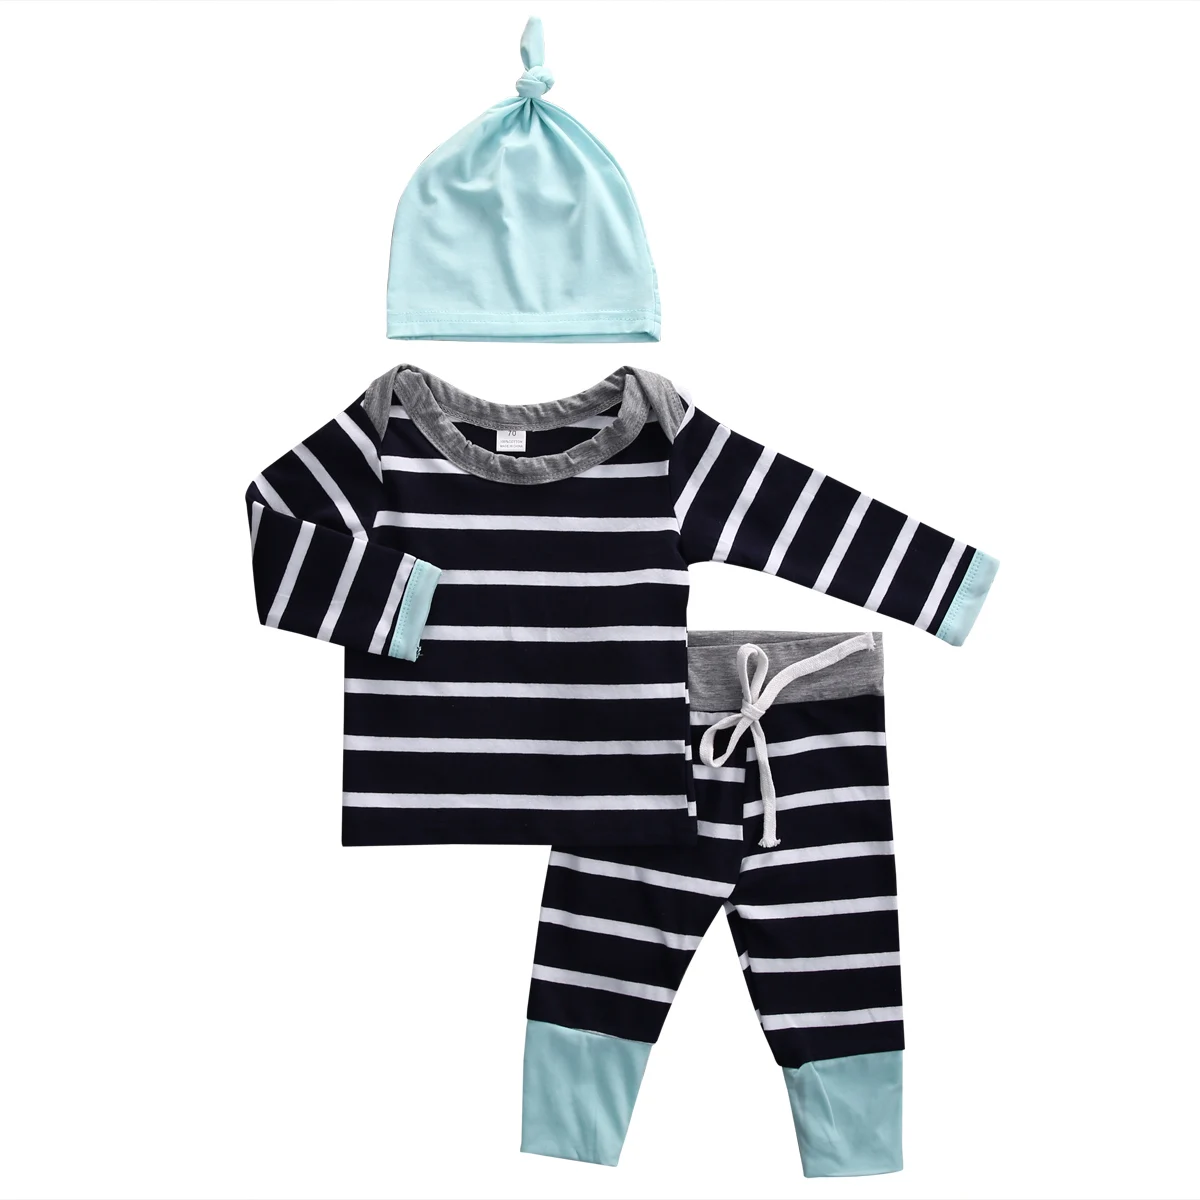 3pcs Newborn Infant Kids Baby Boy Girl Tops/Rompers+Pants+Hat Outfit Clothes Set 